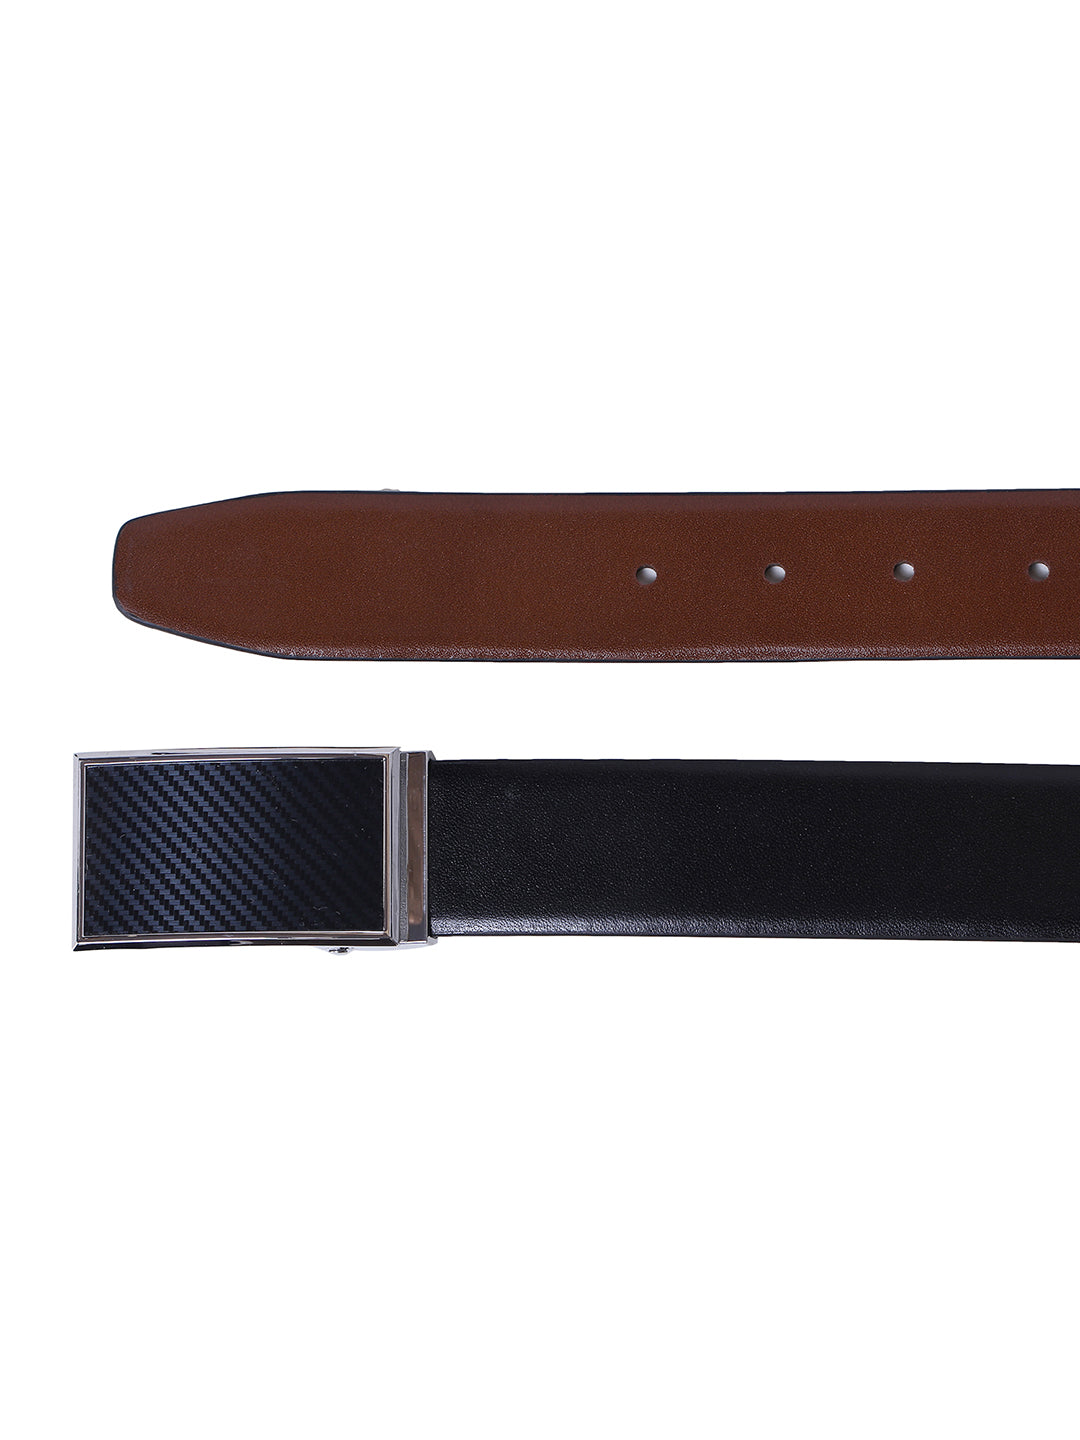 Alvaro Castagnino Men's Black::Brown Color Reversible Leather Belt